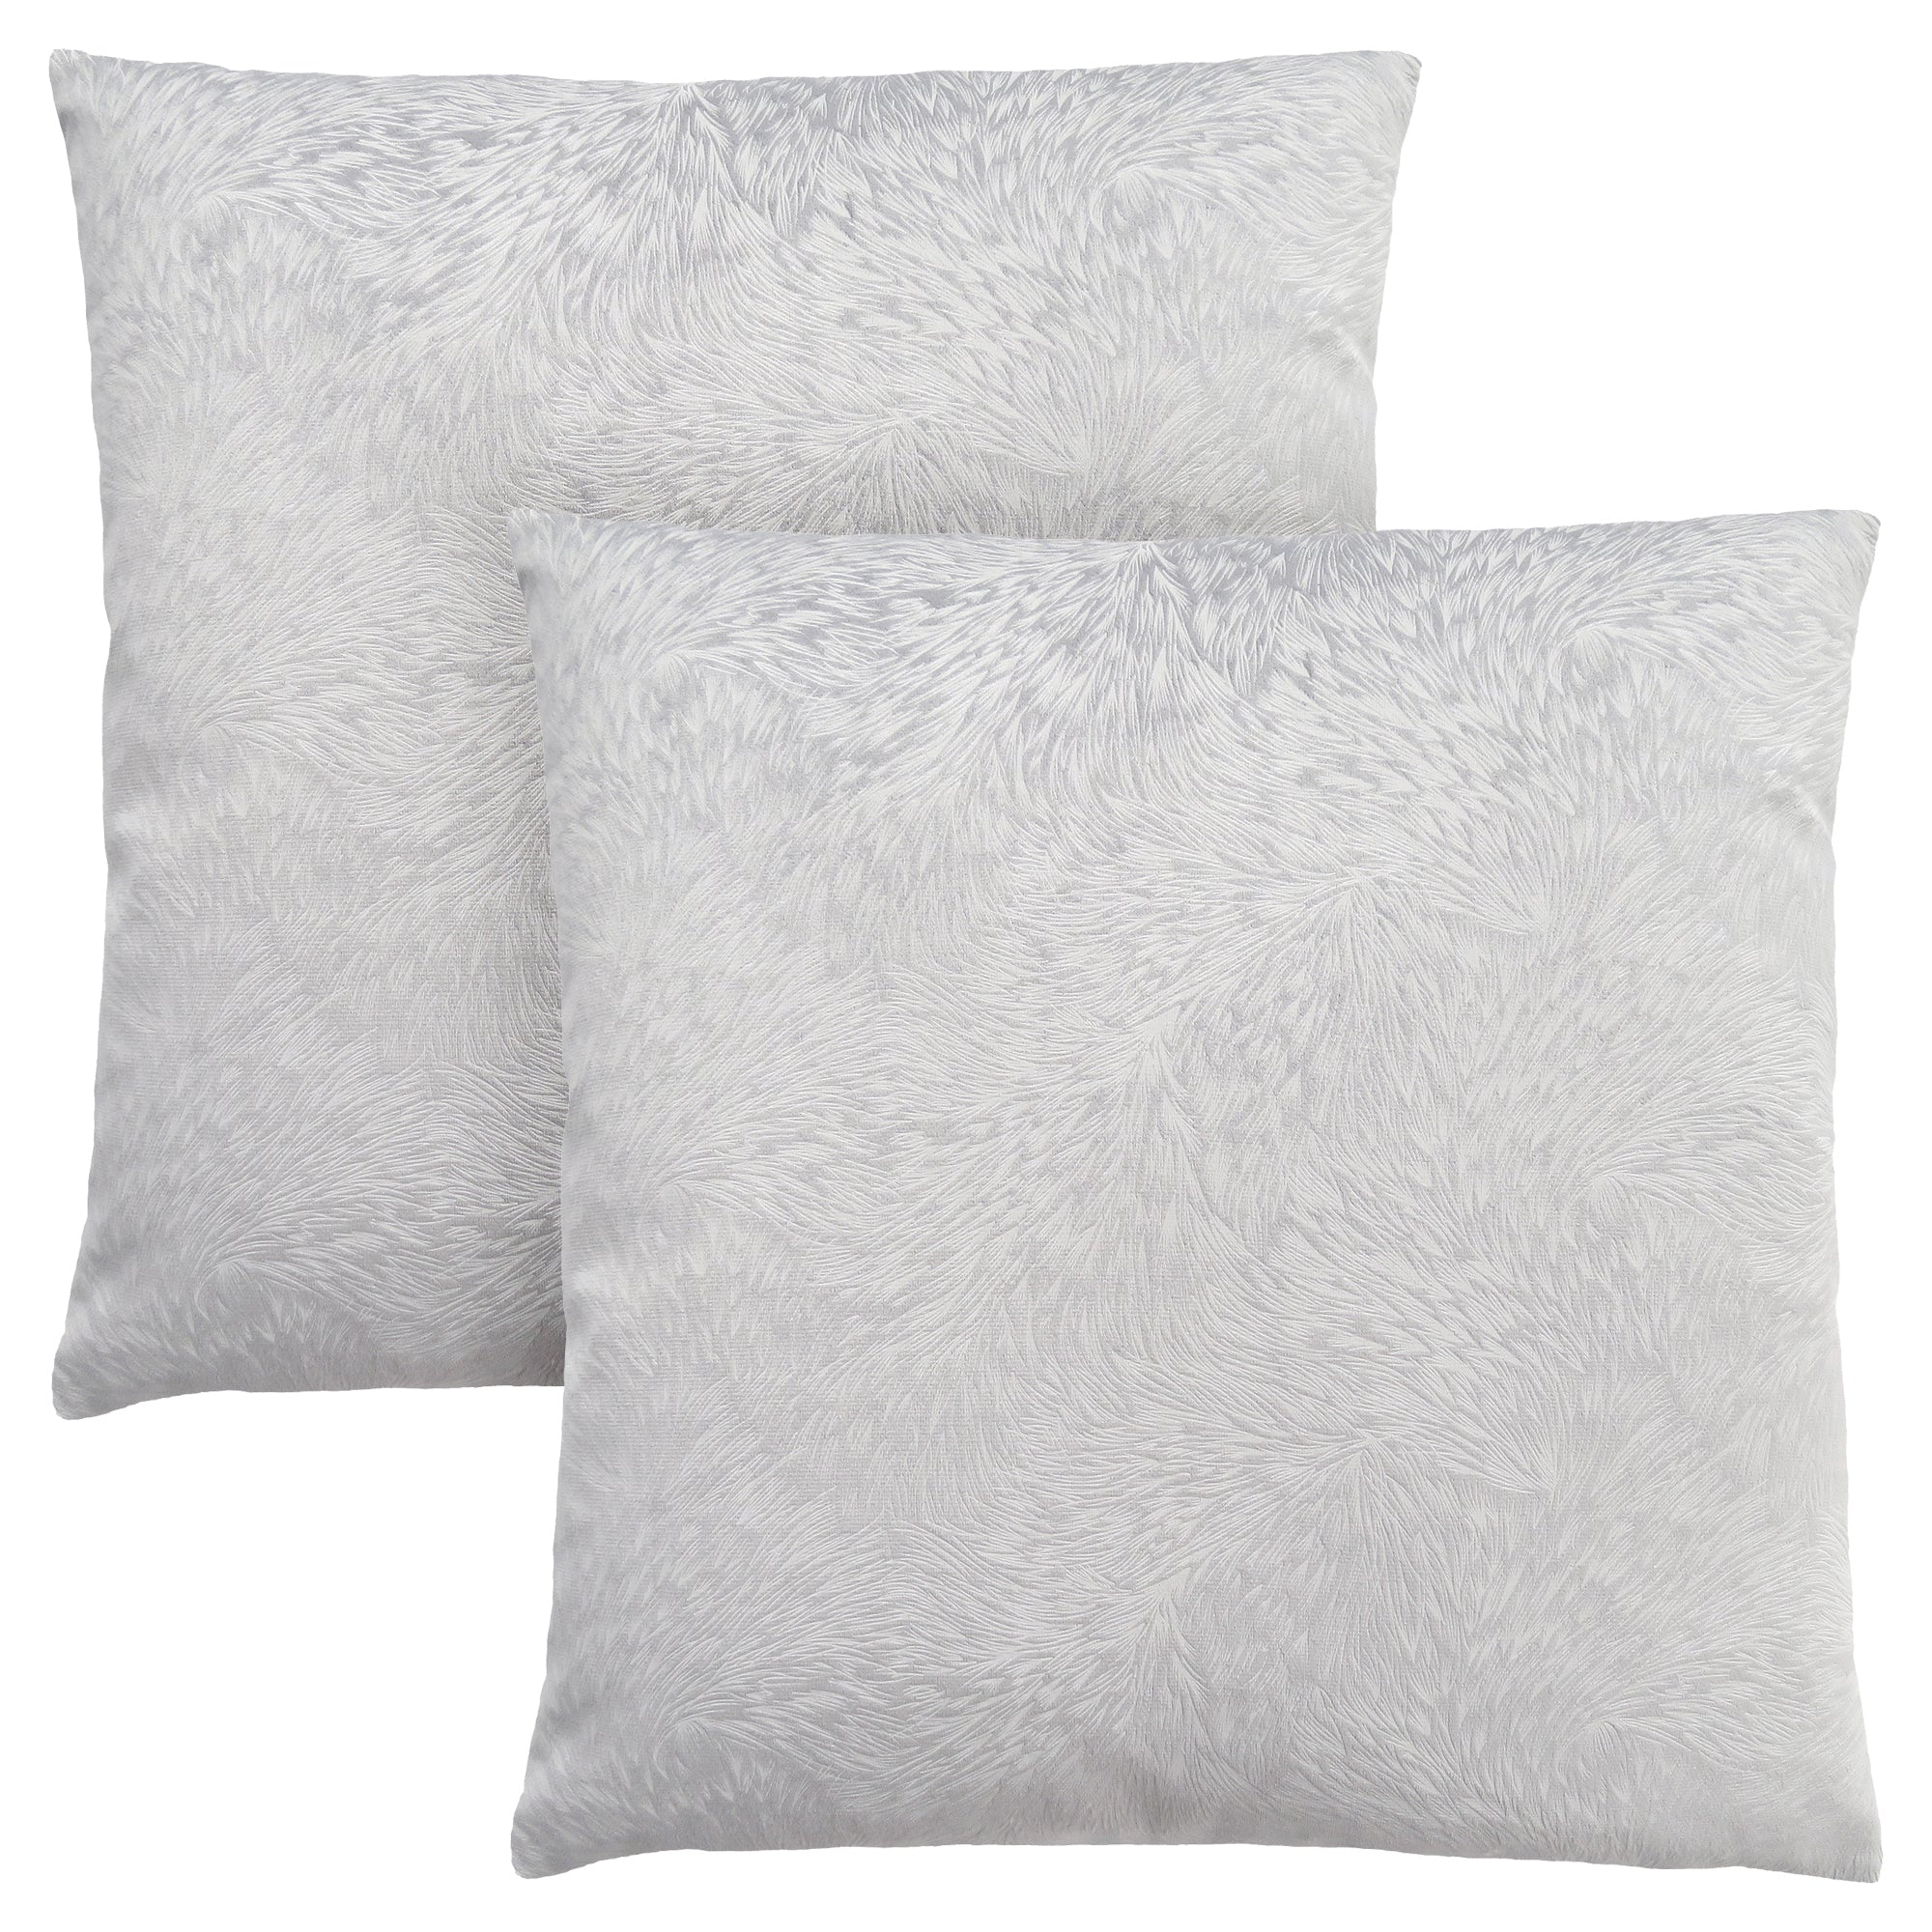 Pillow - 18X 18 / Light Grey Feathered Velvet / 2Pcs